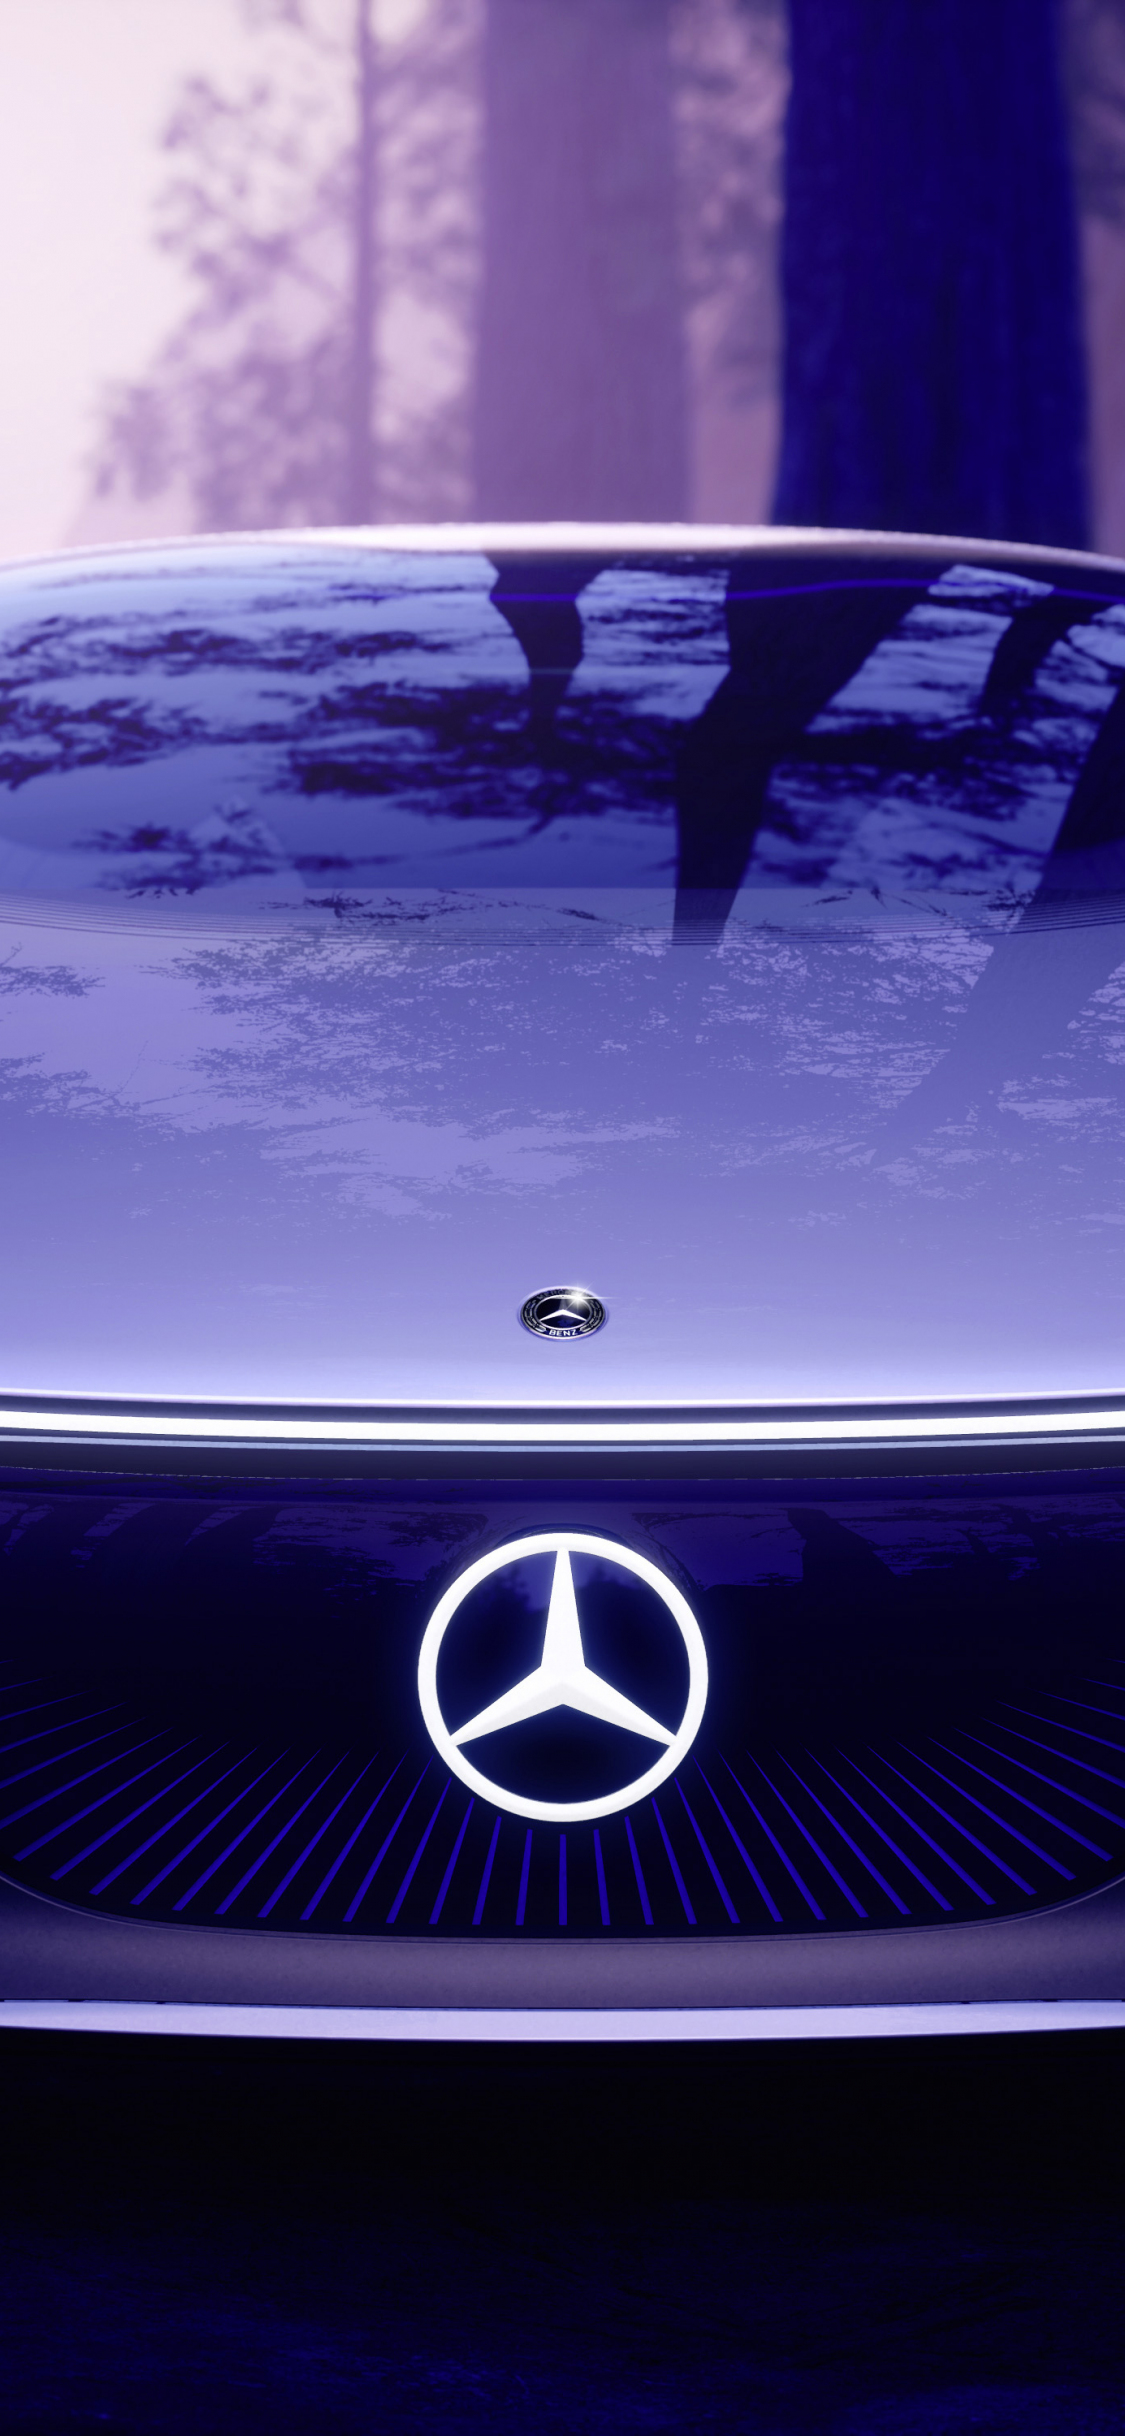 Mercedes Benz Vision Avtr Car Wallpaper